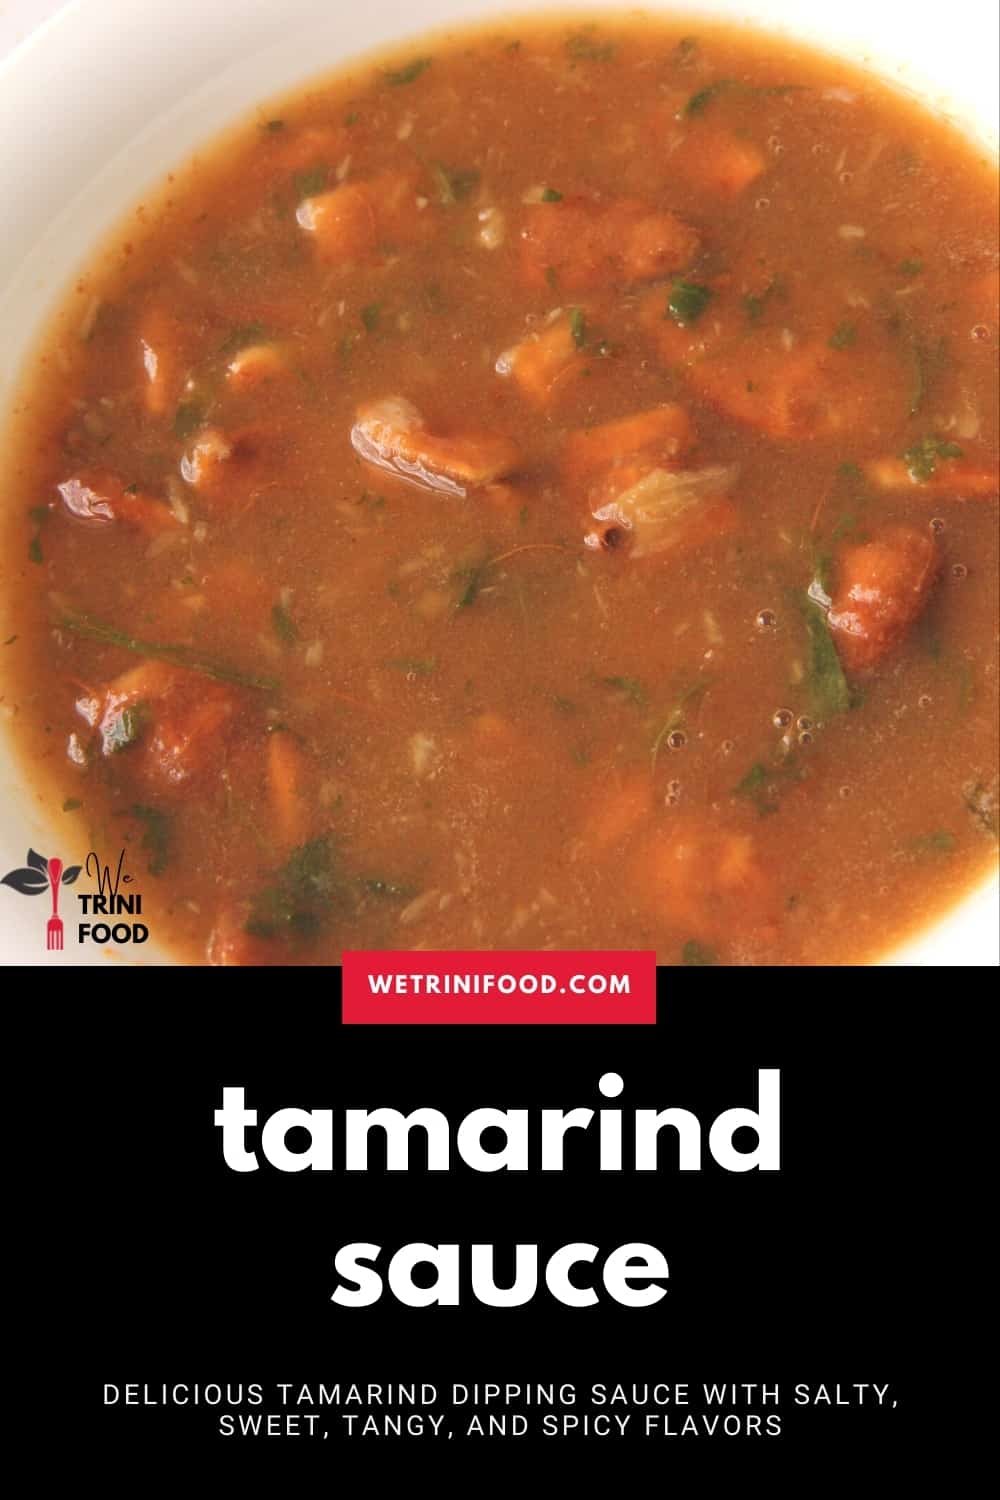 tamarind sauce pinterest image